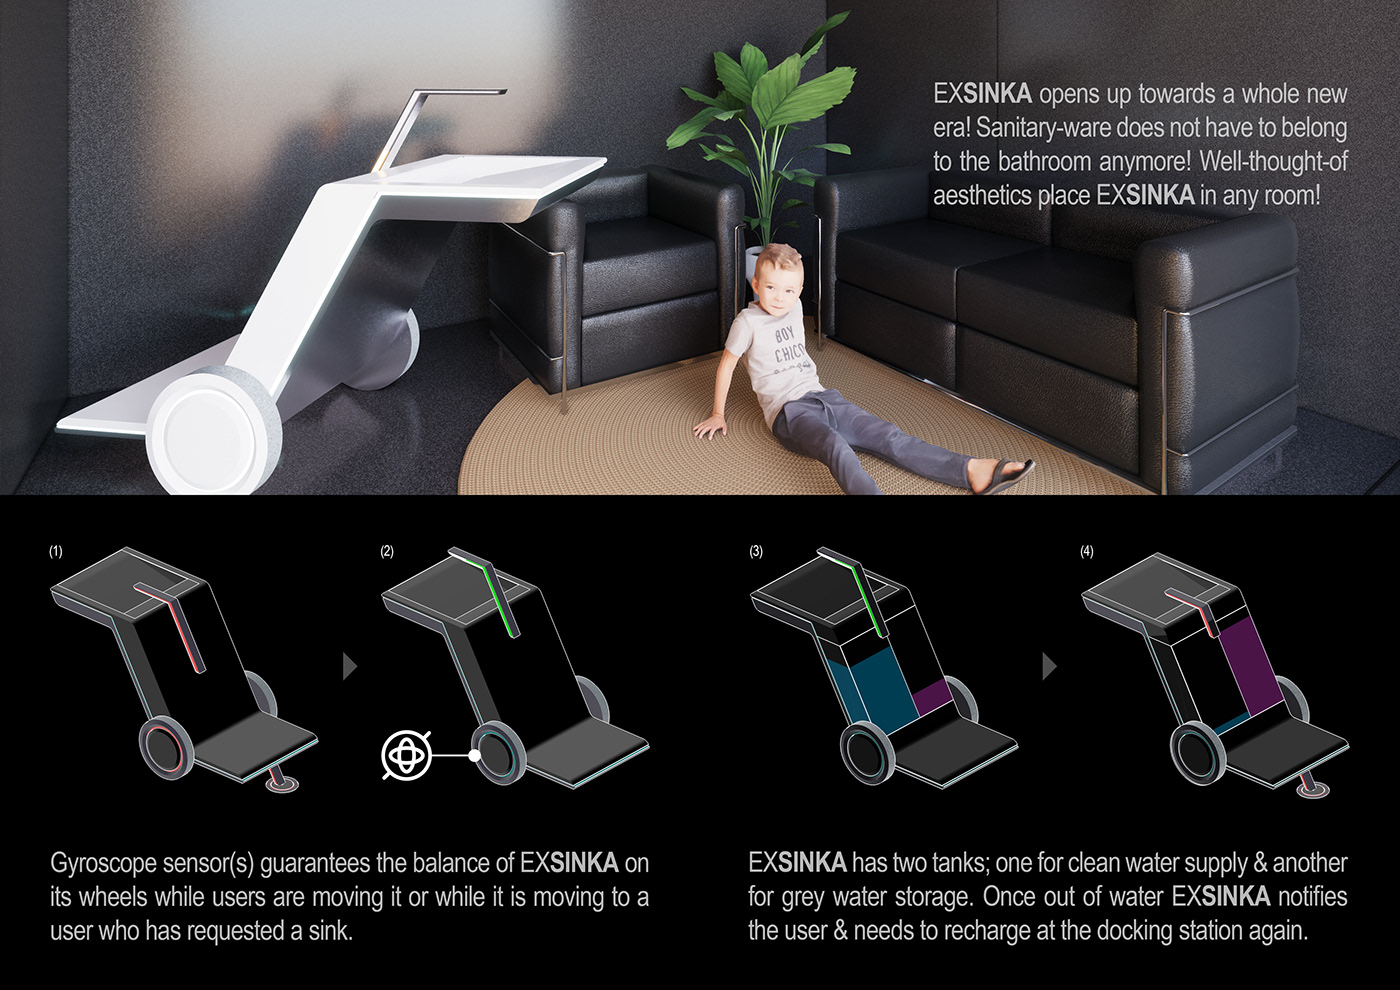 Roca master design challenge barcelona exsinka Ahmad Alkattan UAE dubai Sink mobility ai